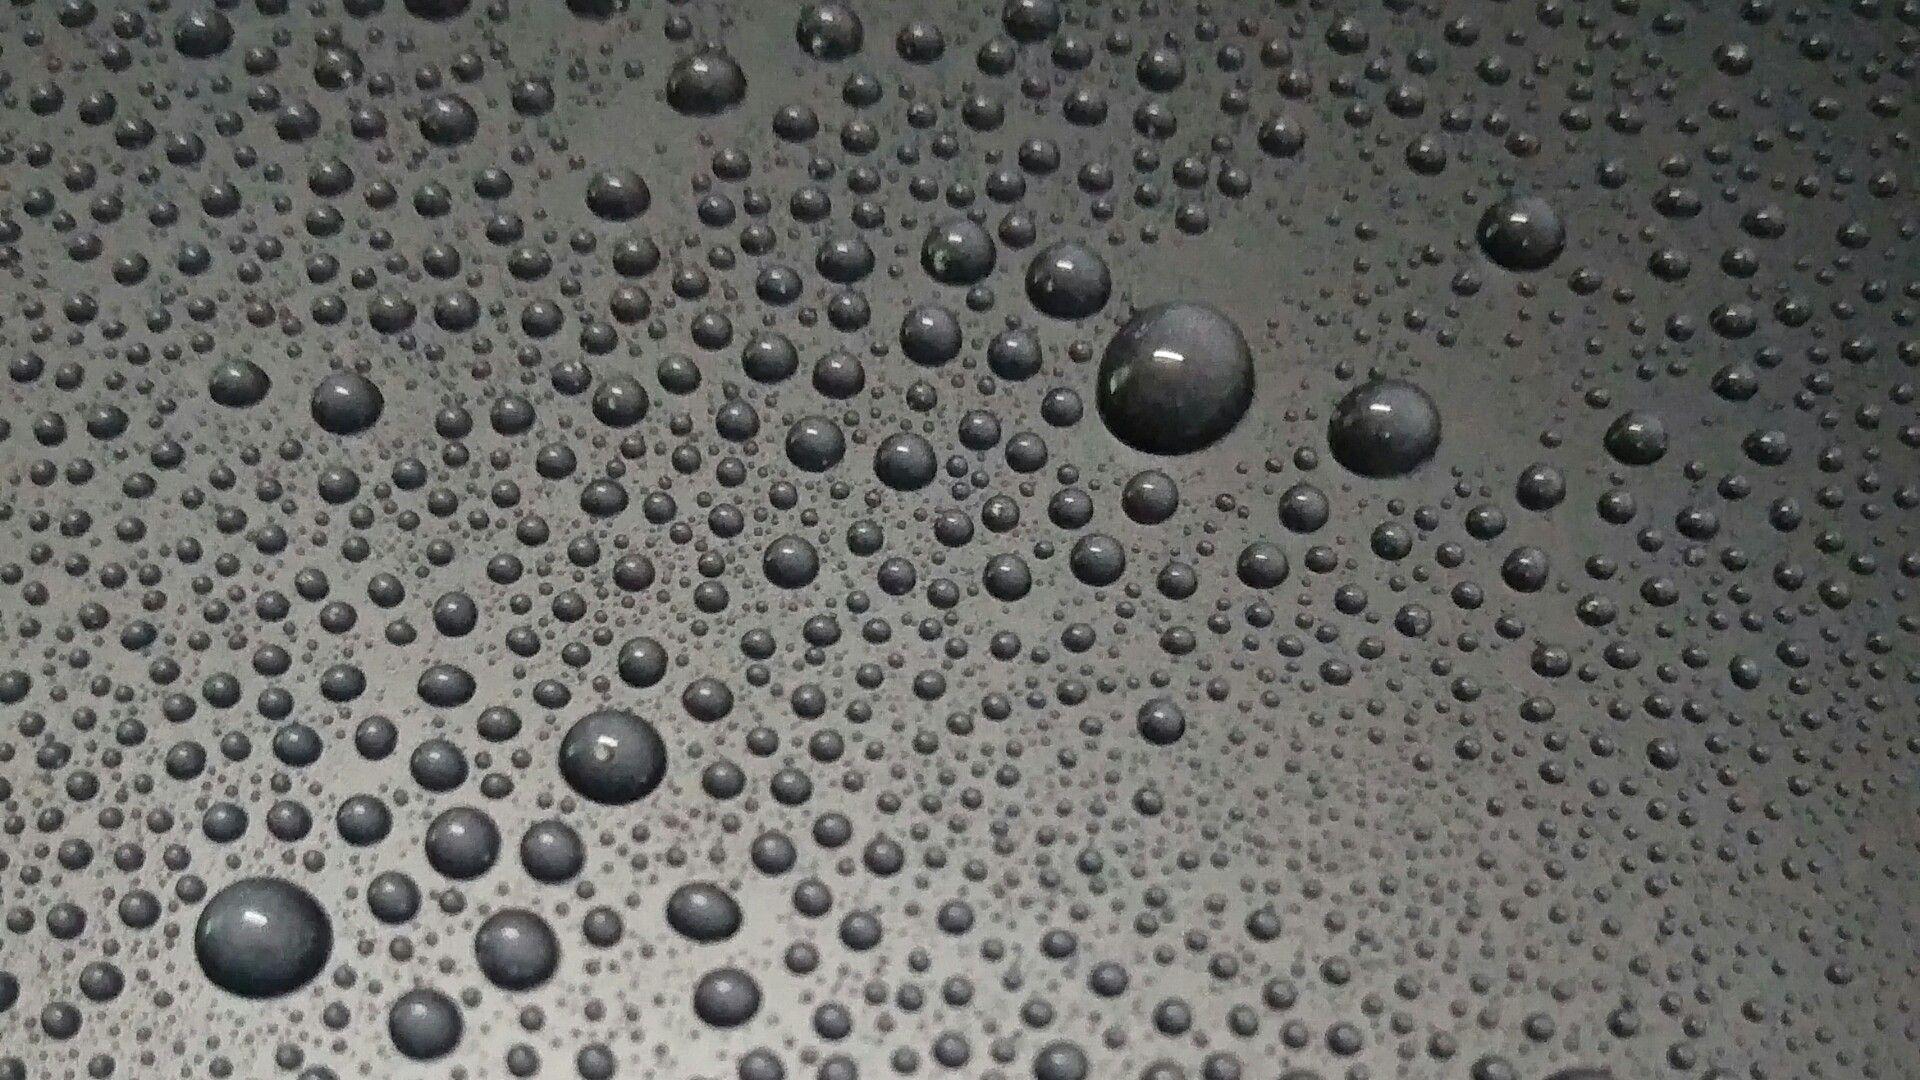 Water Droplets Wallpaper. Wallpaper Studio 10. Tens of thousands